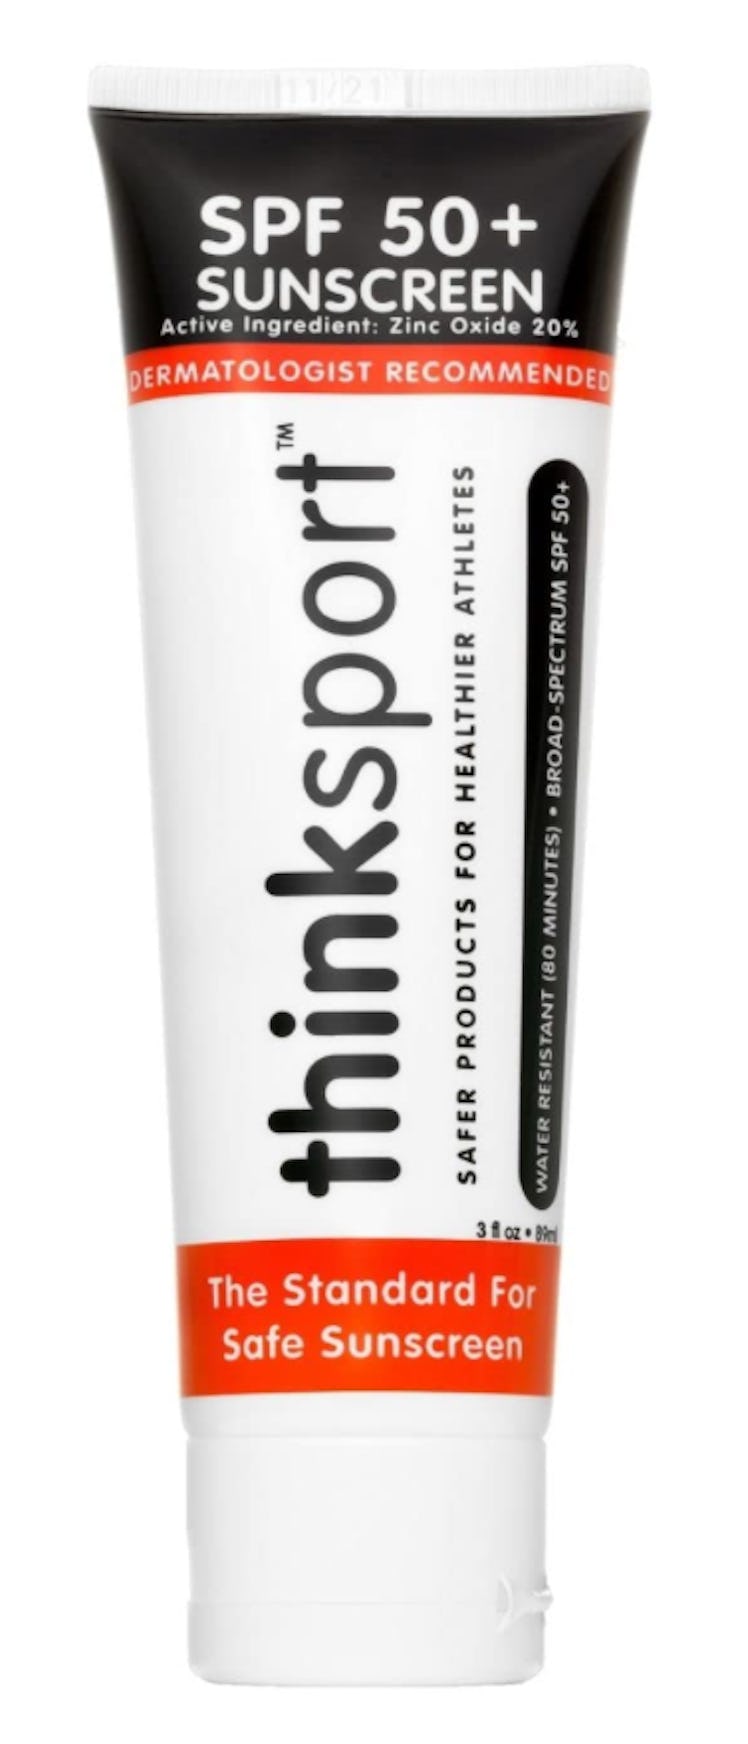 Thinksport Safe Sunscreen SPF 50+ (3 Oz.) Sunscreen for Bald Men